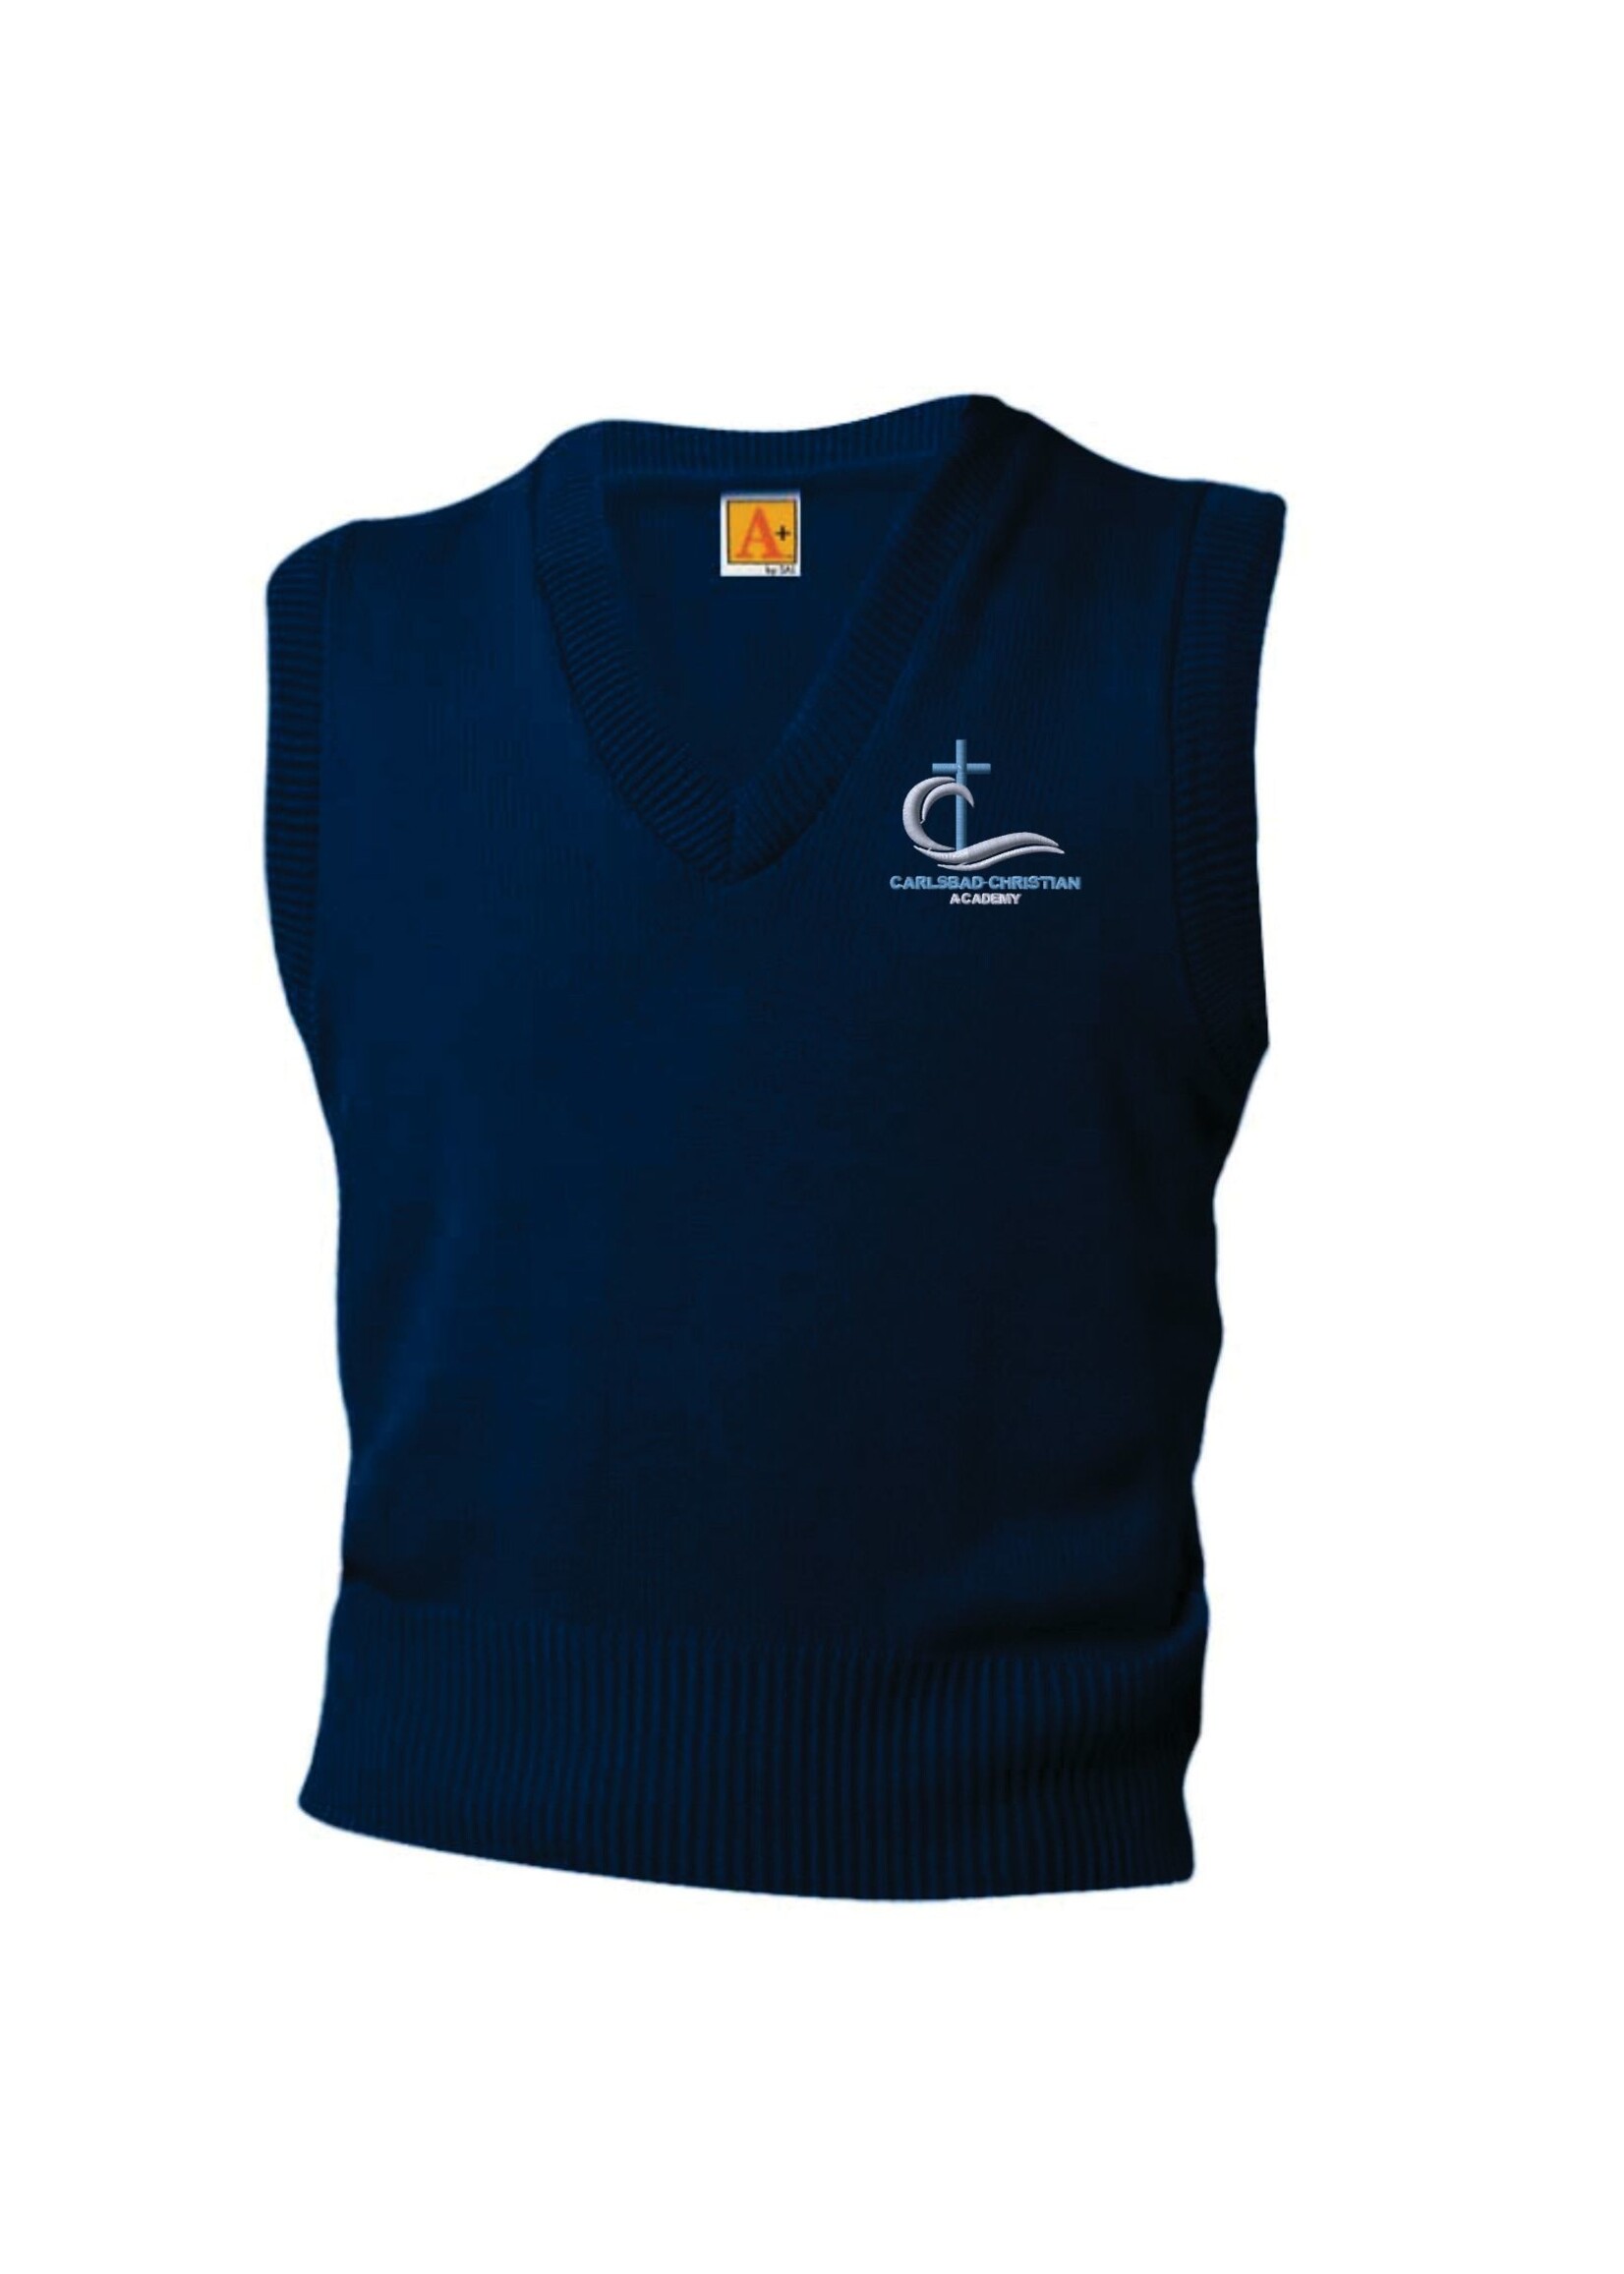 Carlsbad Navy Sweater Vest